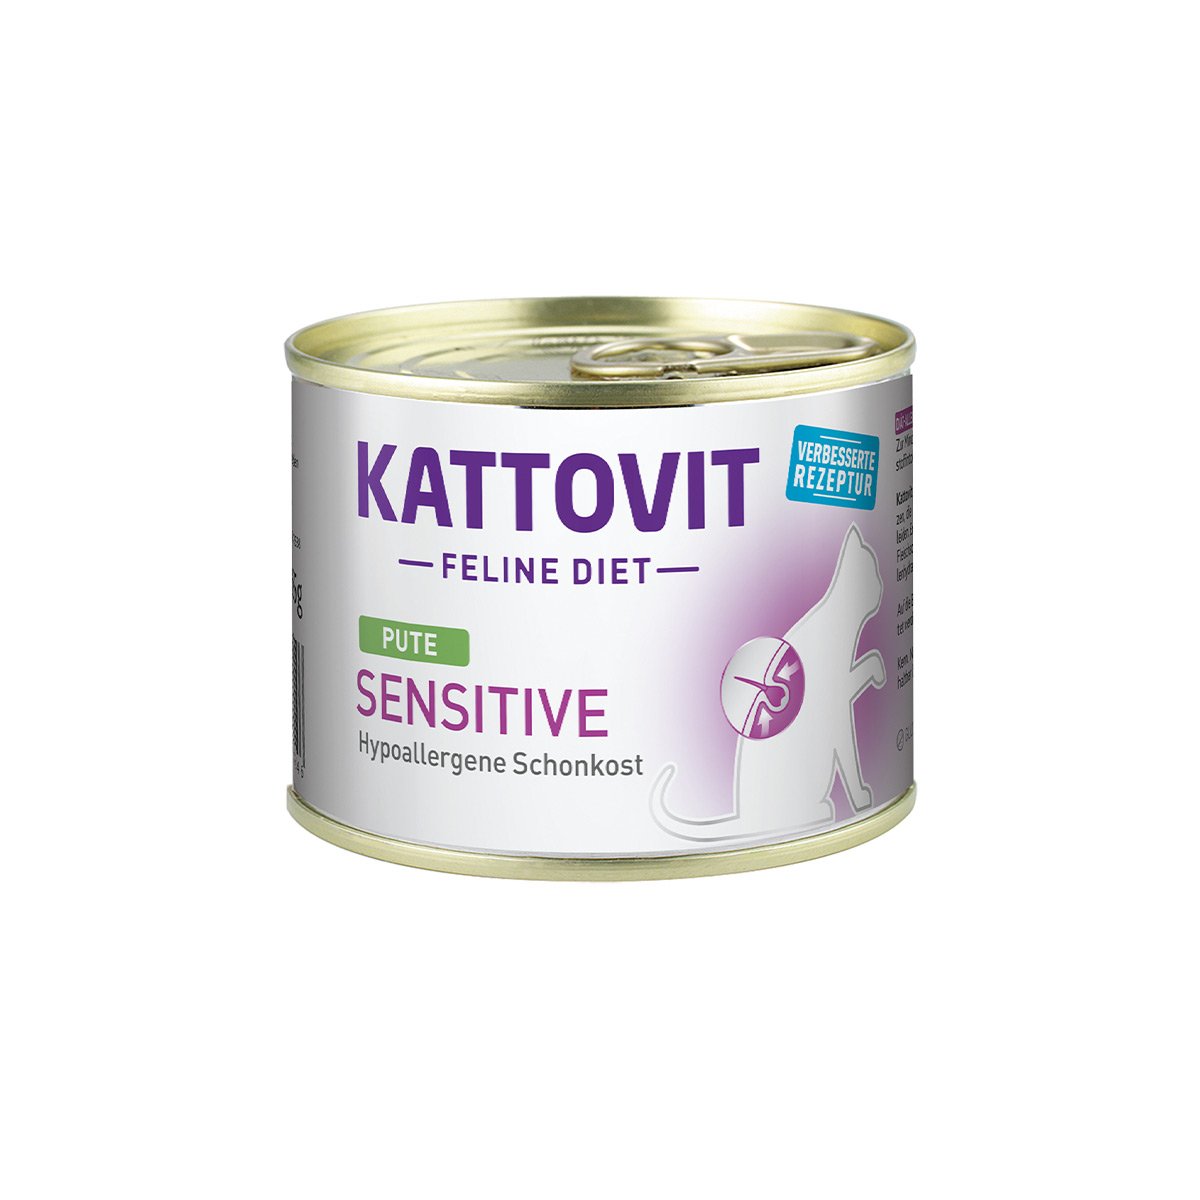 Kattovit Feline Diet Sensitive Pute 12x185g von Kattovit